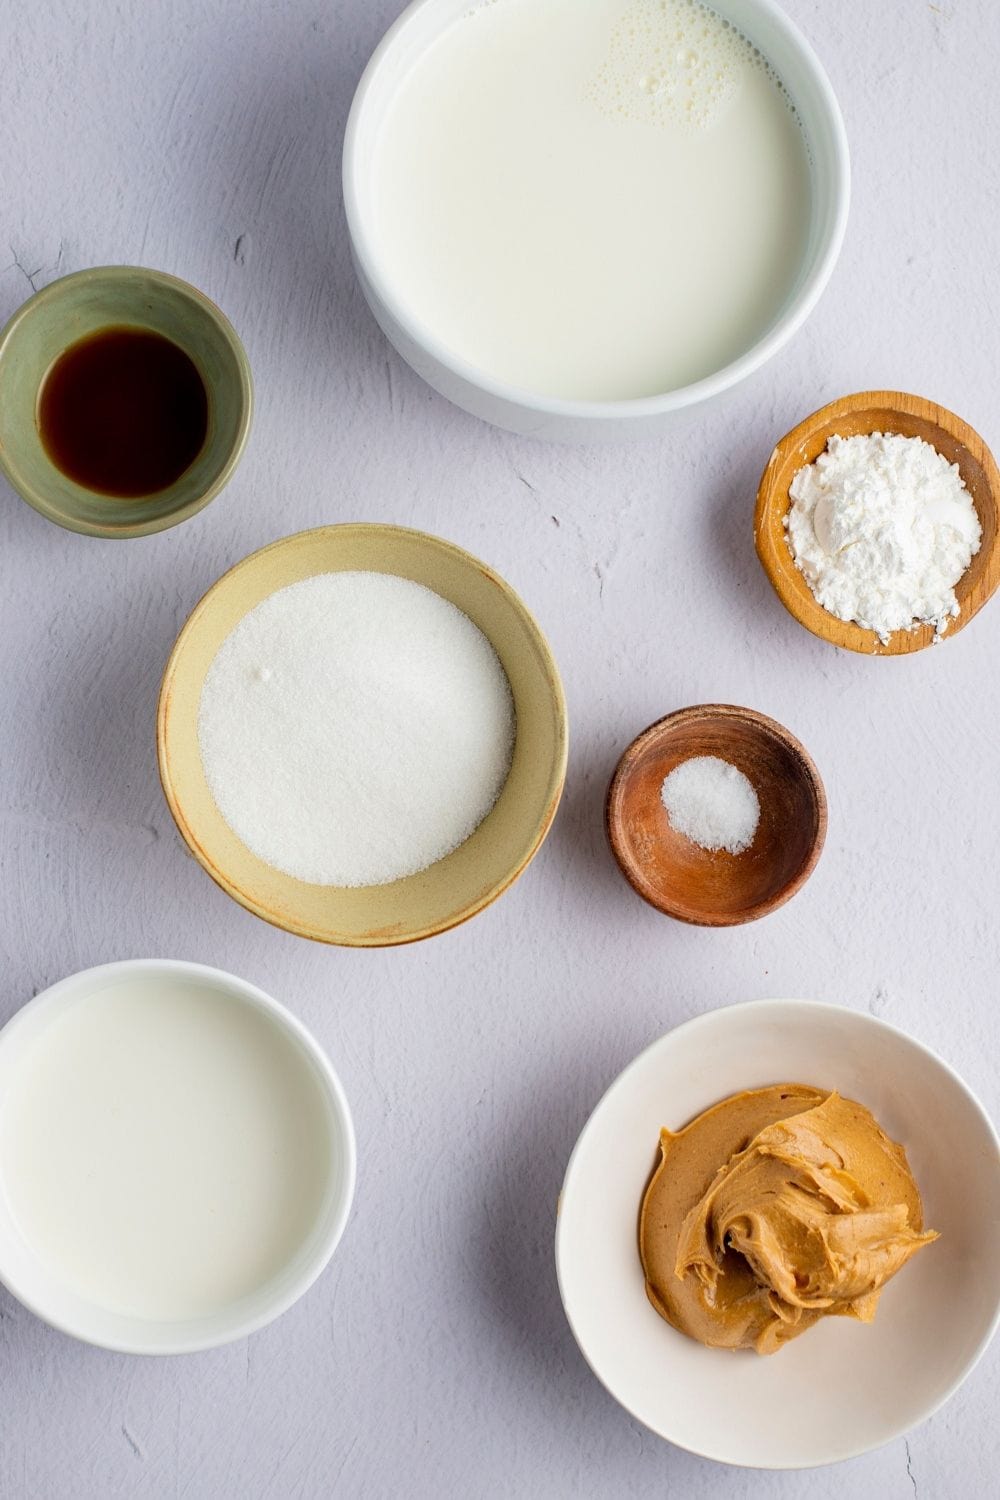 Peanut Butter Pudding Ingredients: White Sugar, Cornstarch, Salt, Milk, Peanut Butter and Vanilla Extract